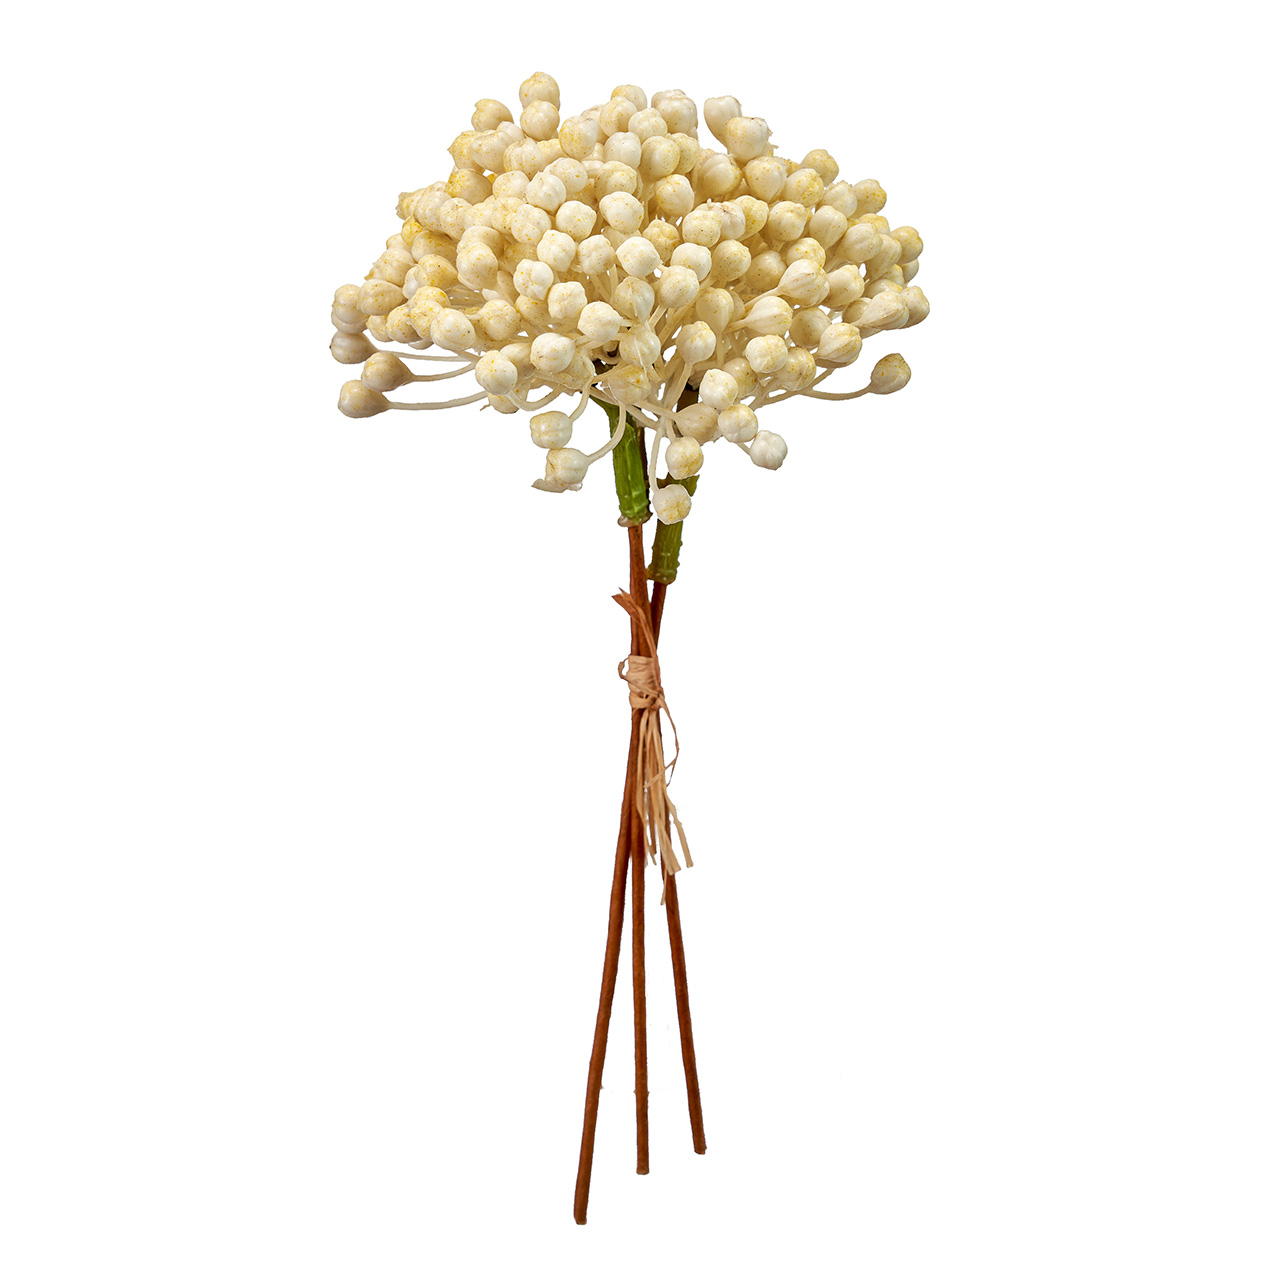 MAGIQ　グレインベリー　クリーム　アーティフィシャルフラワー　造花　実もの　ベリー　FM004812-037